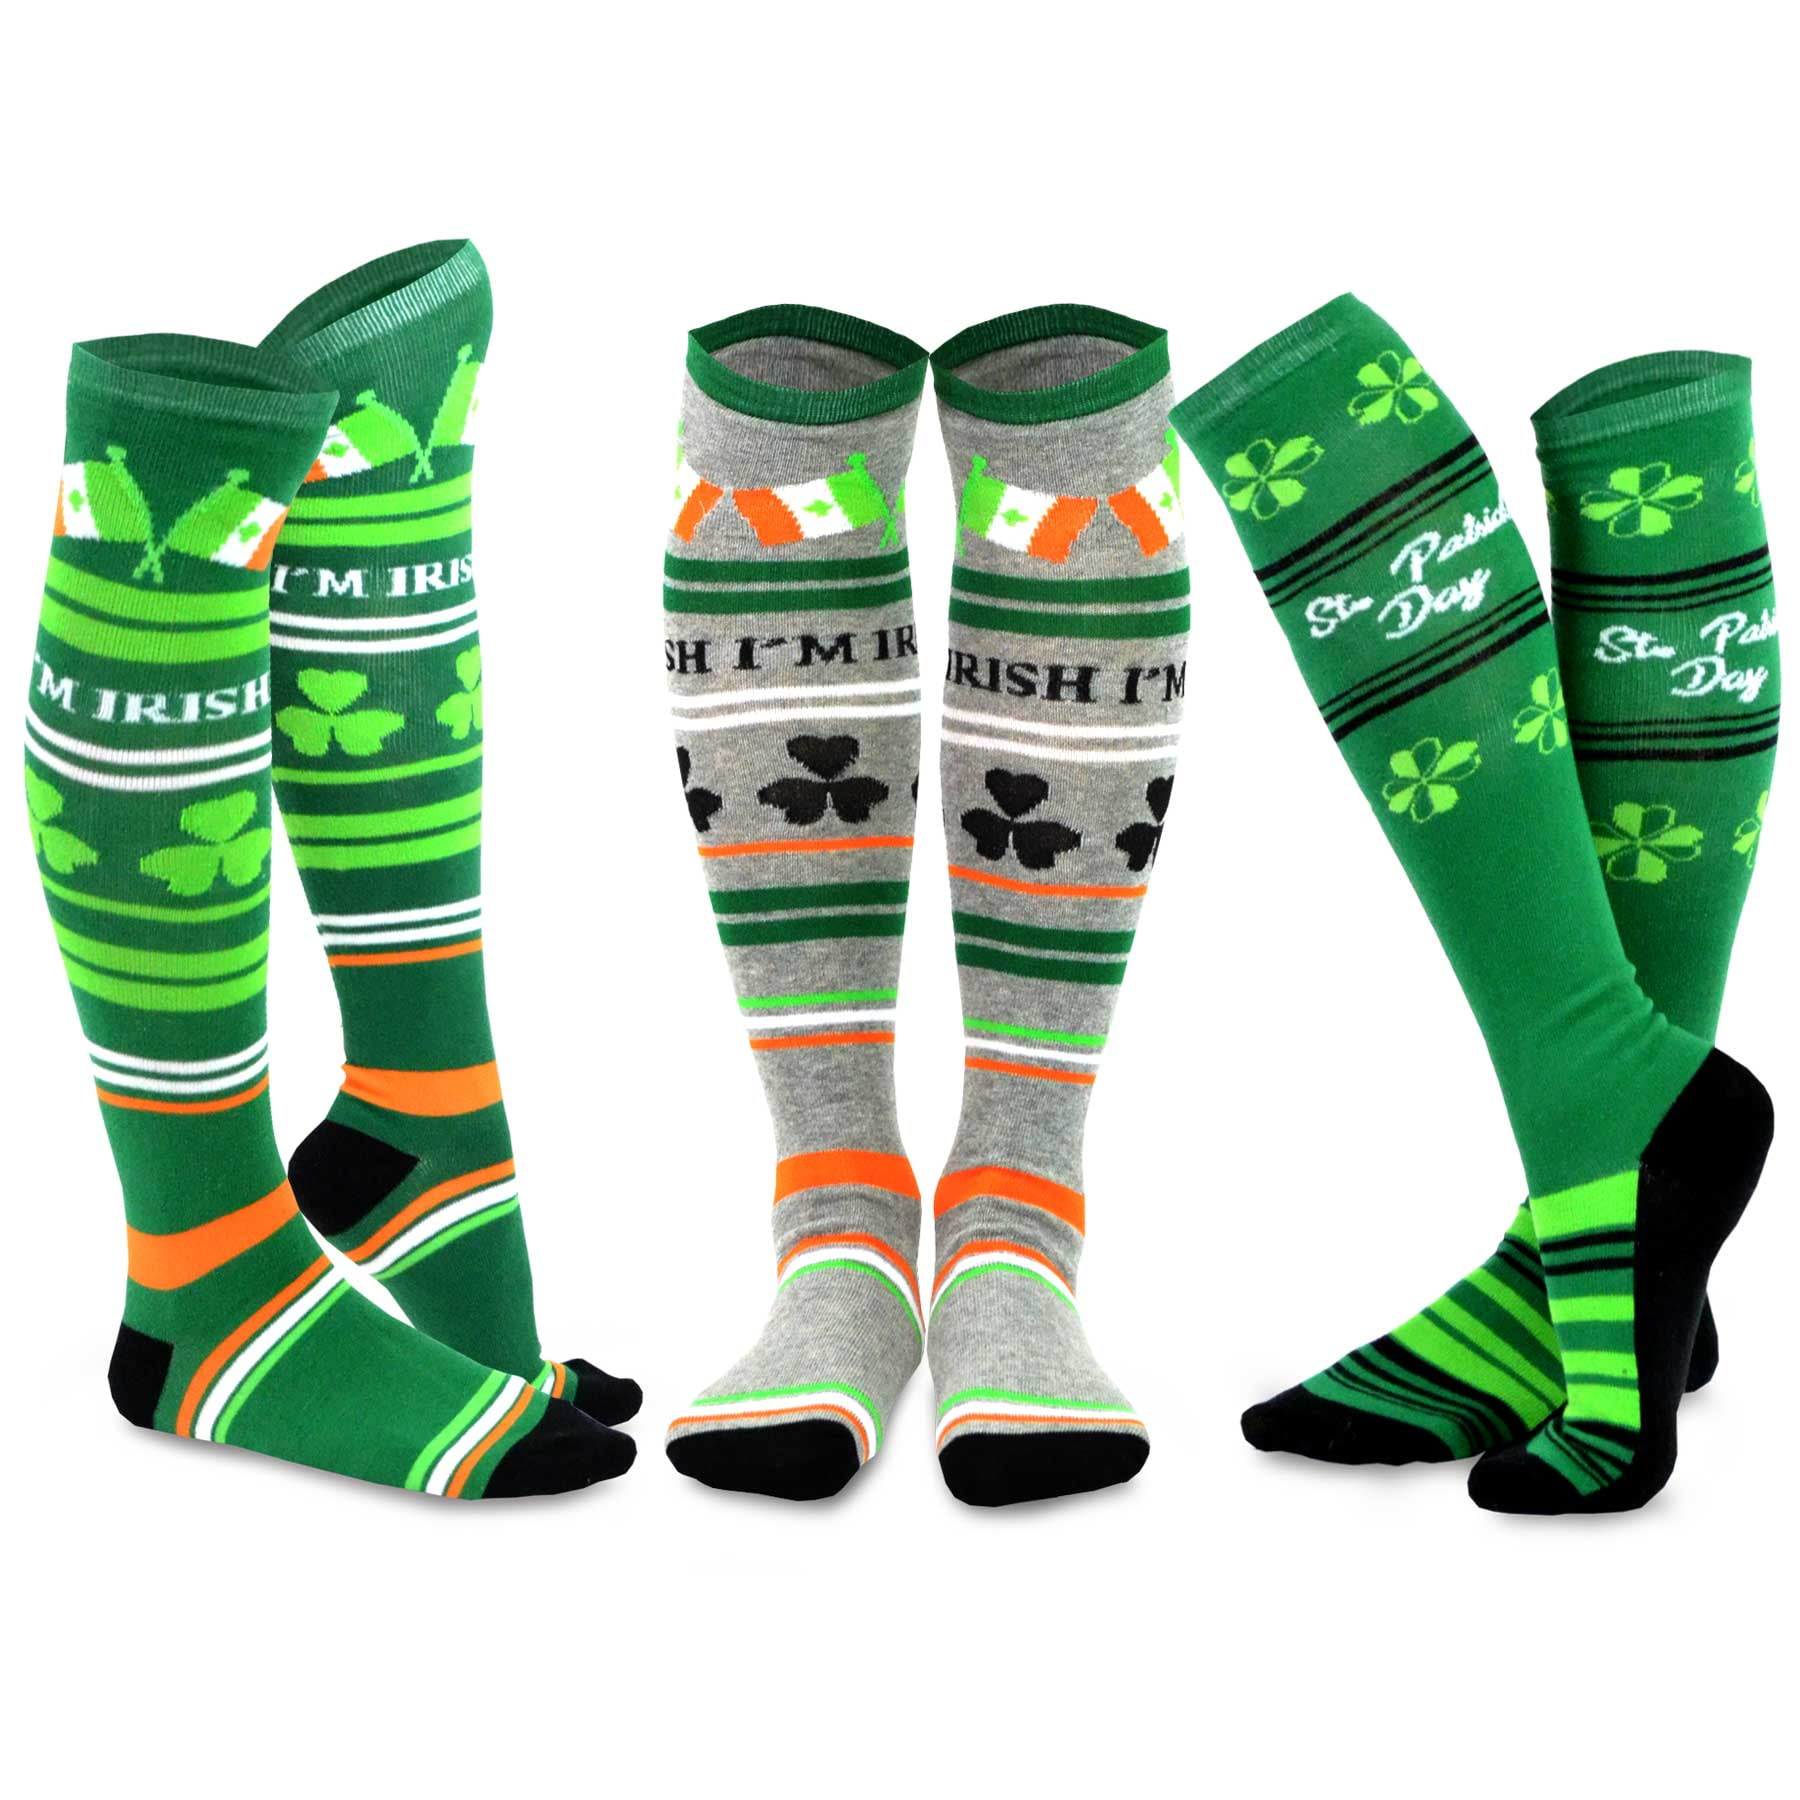 NWT St Patrick's Patty's Day Knee High Socks Size 9-11 Green Sparkly Shamrocks 